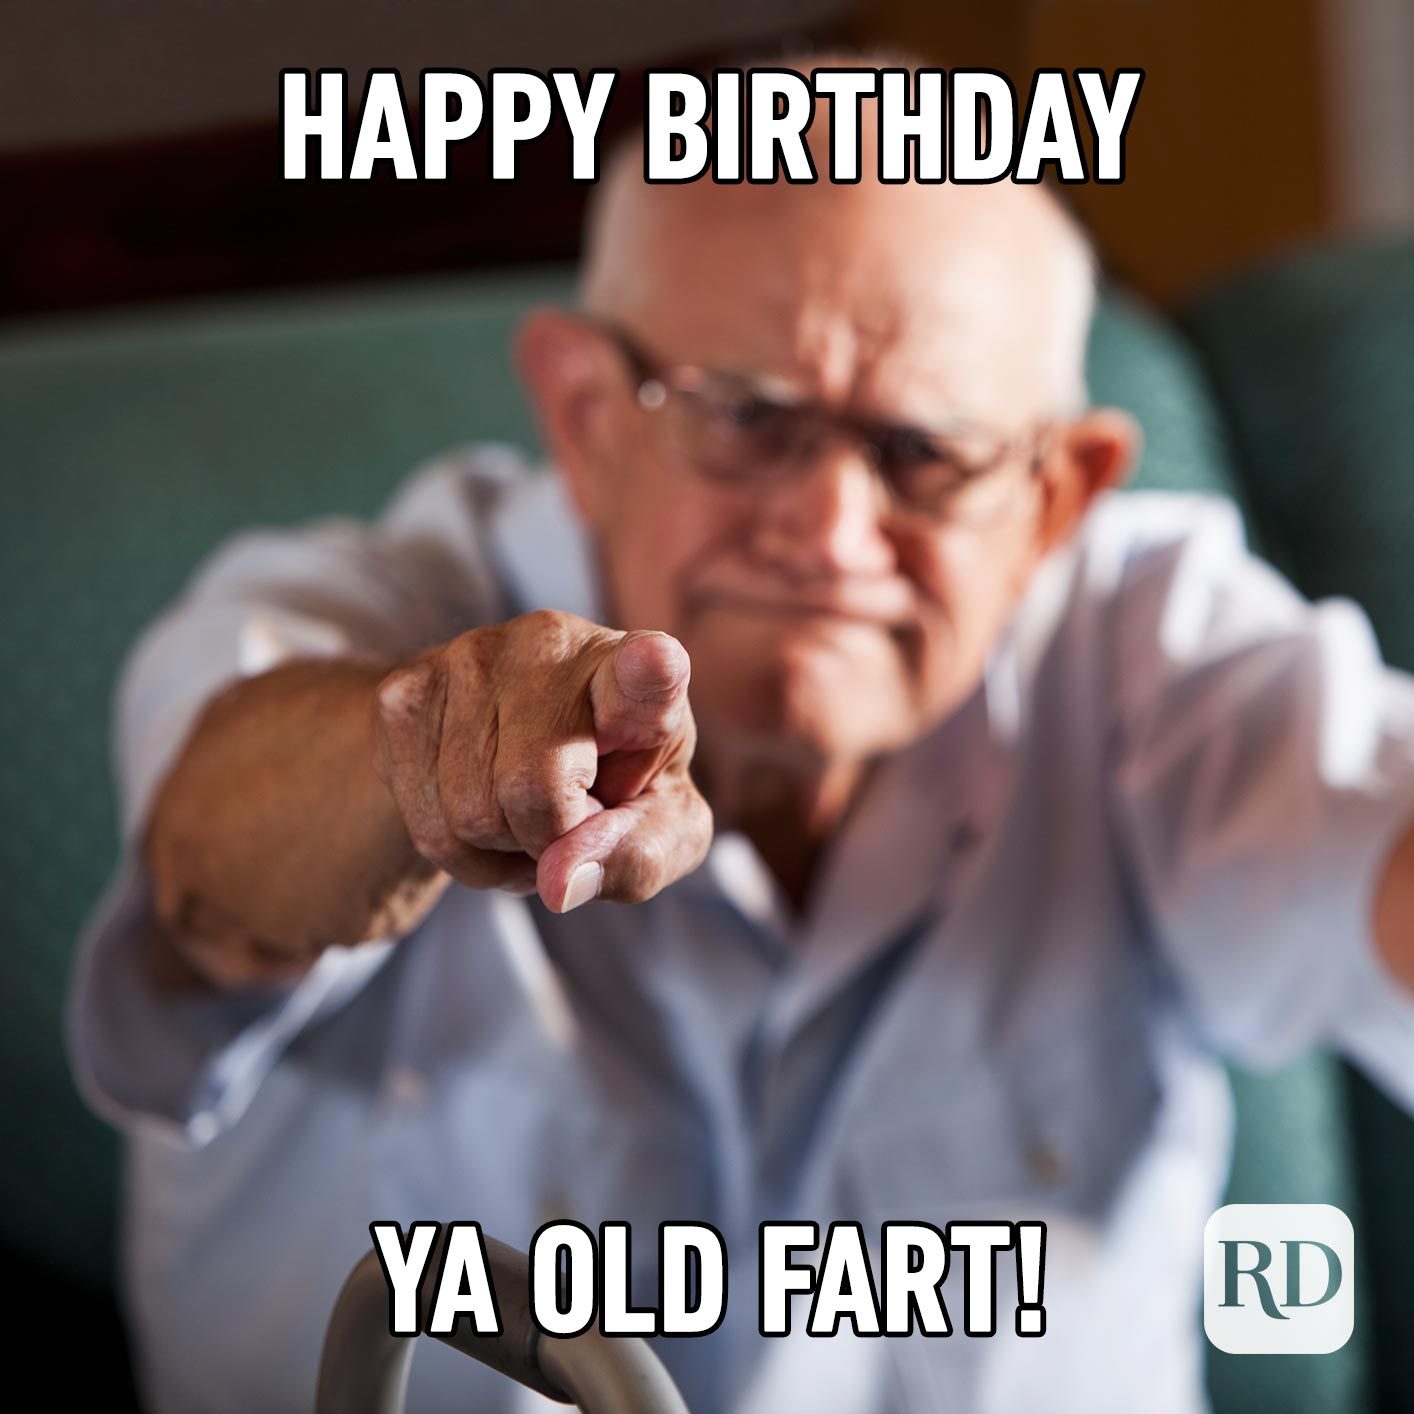 Happy birthday old man meme BirthdayMeme17